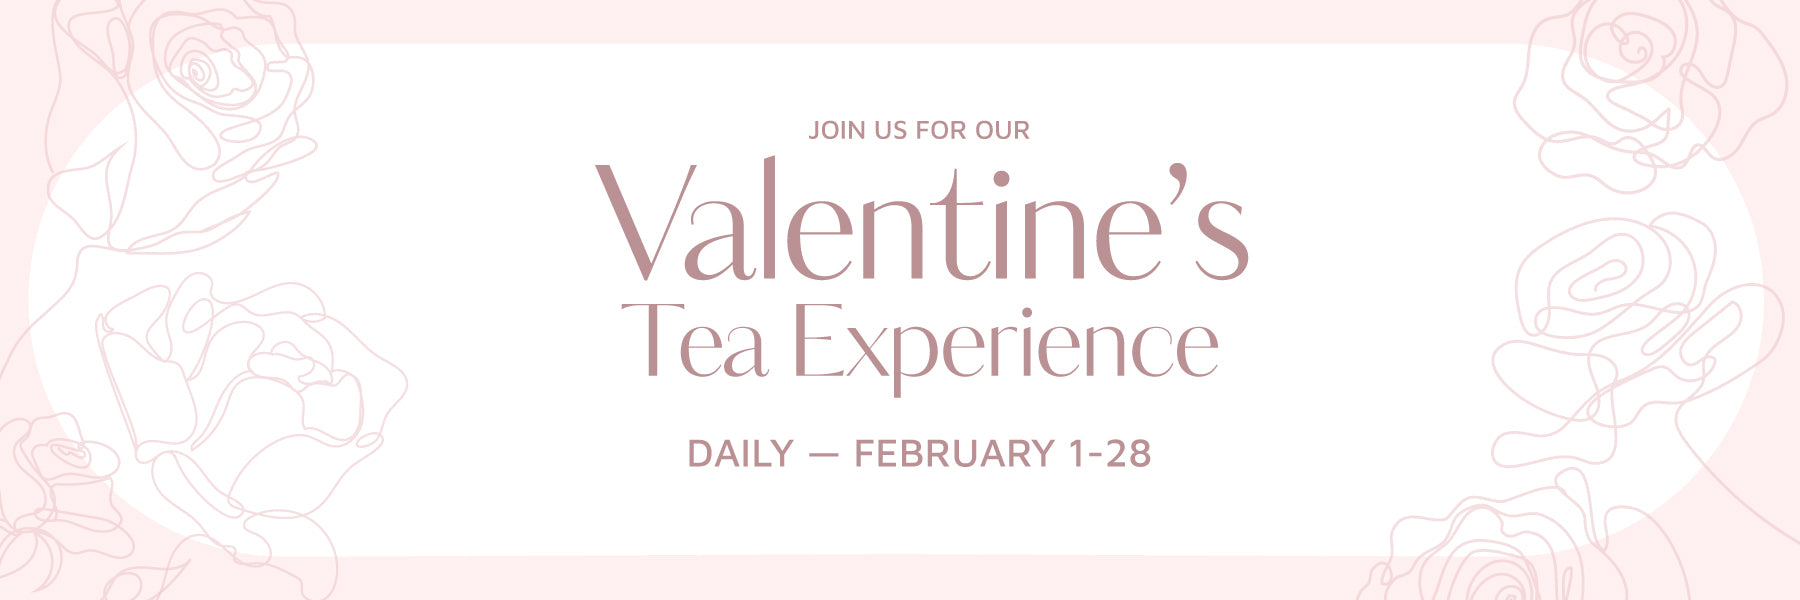 Valentine's Day Tea Experience